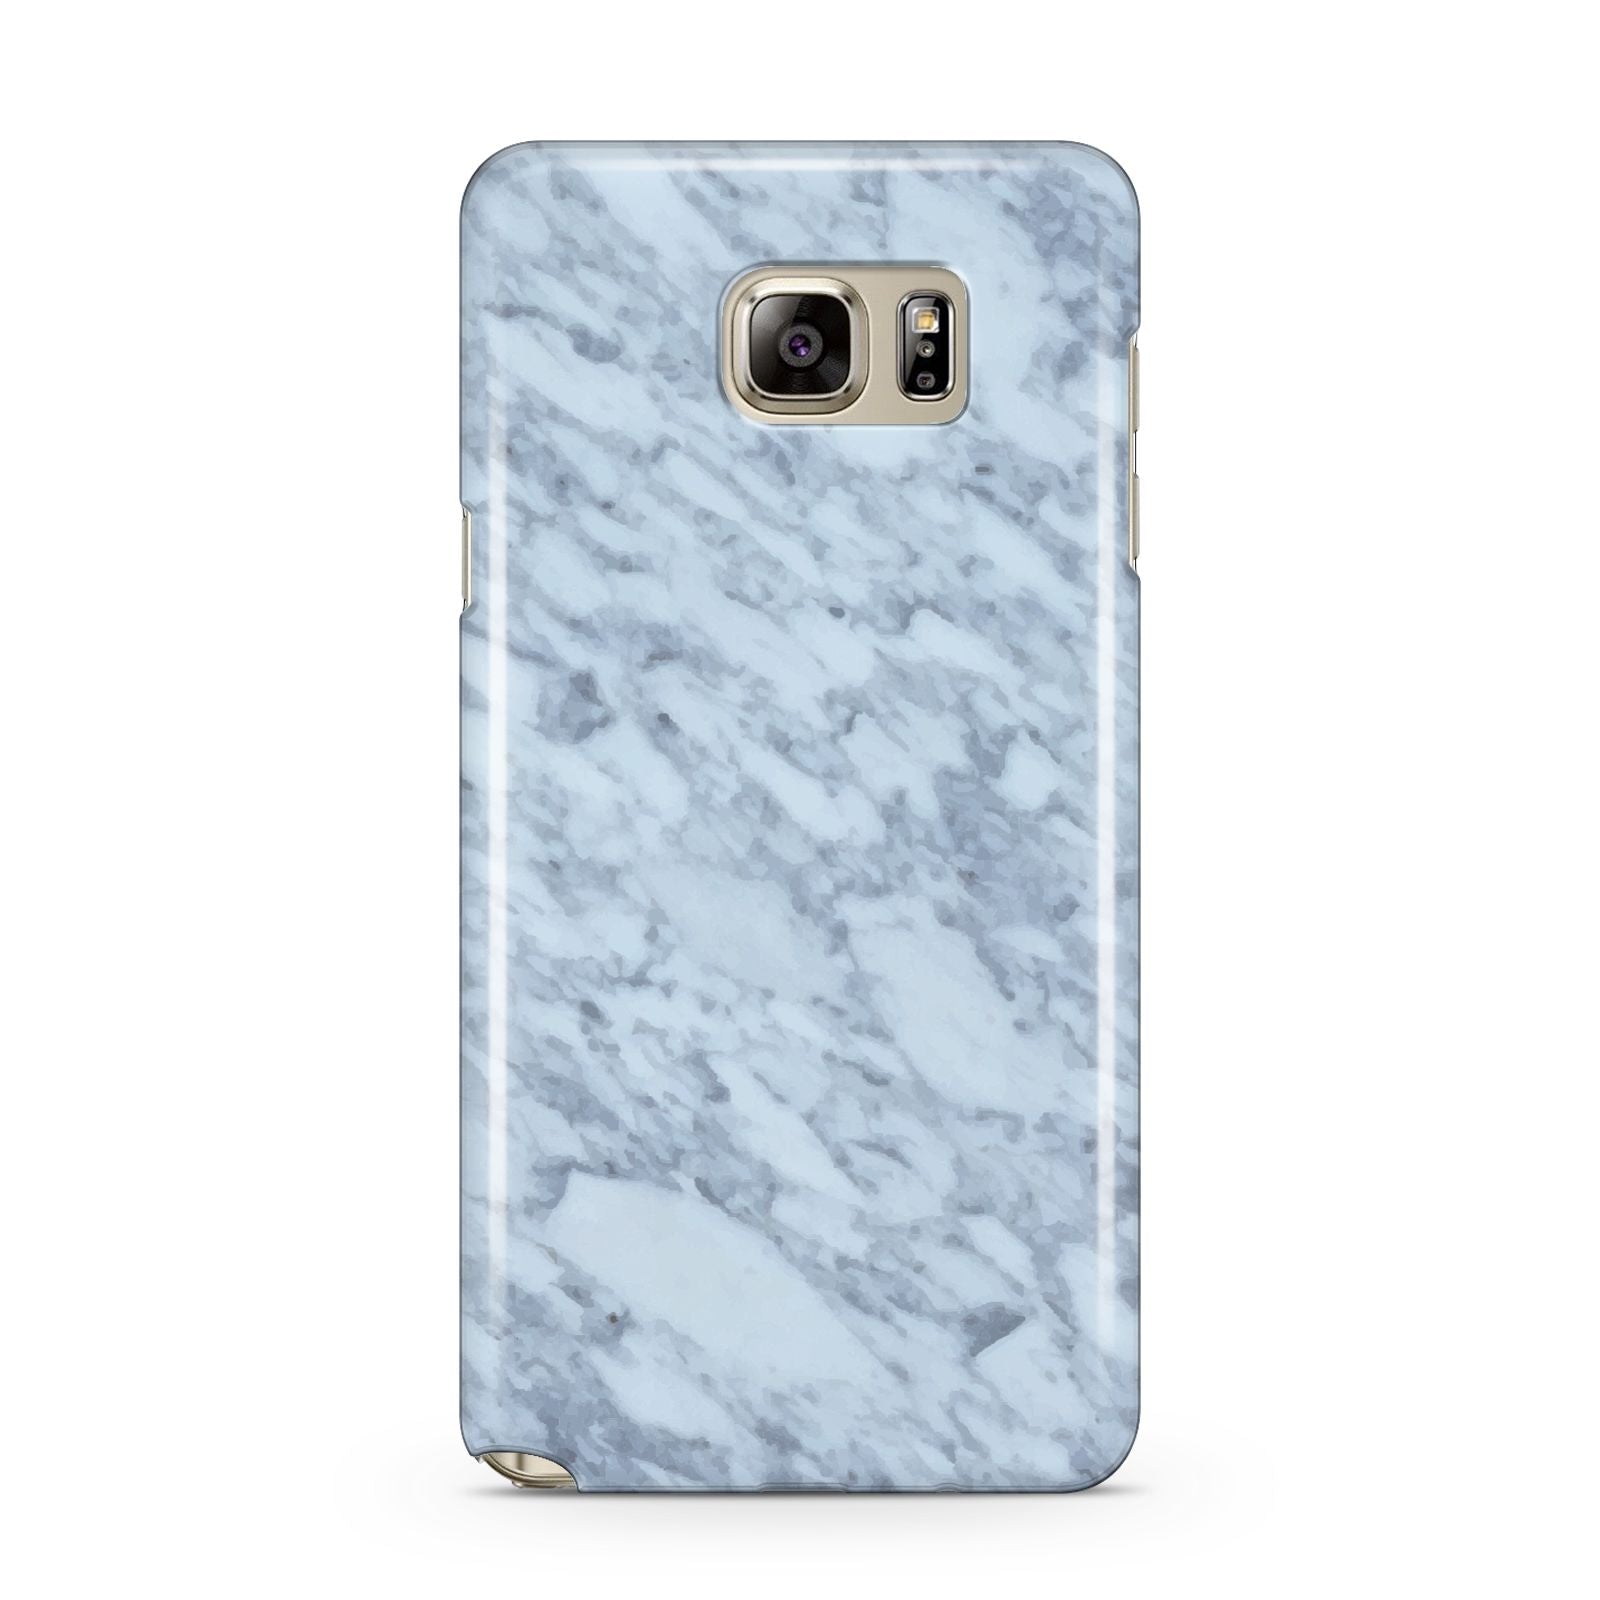 Faux Marble Grey 2 Samsung Galaxy Note 5 Case